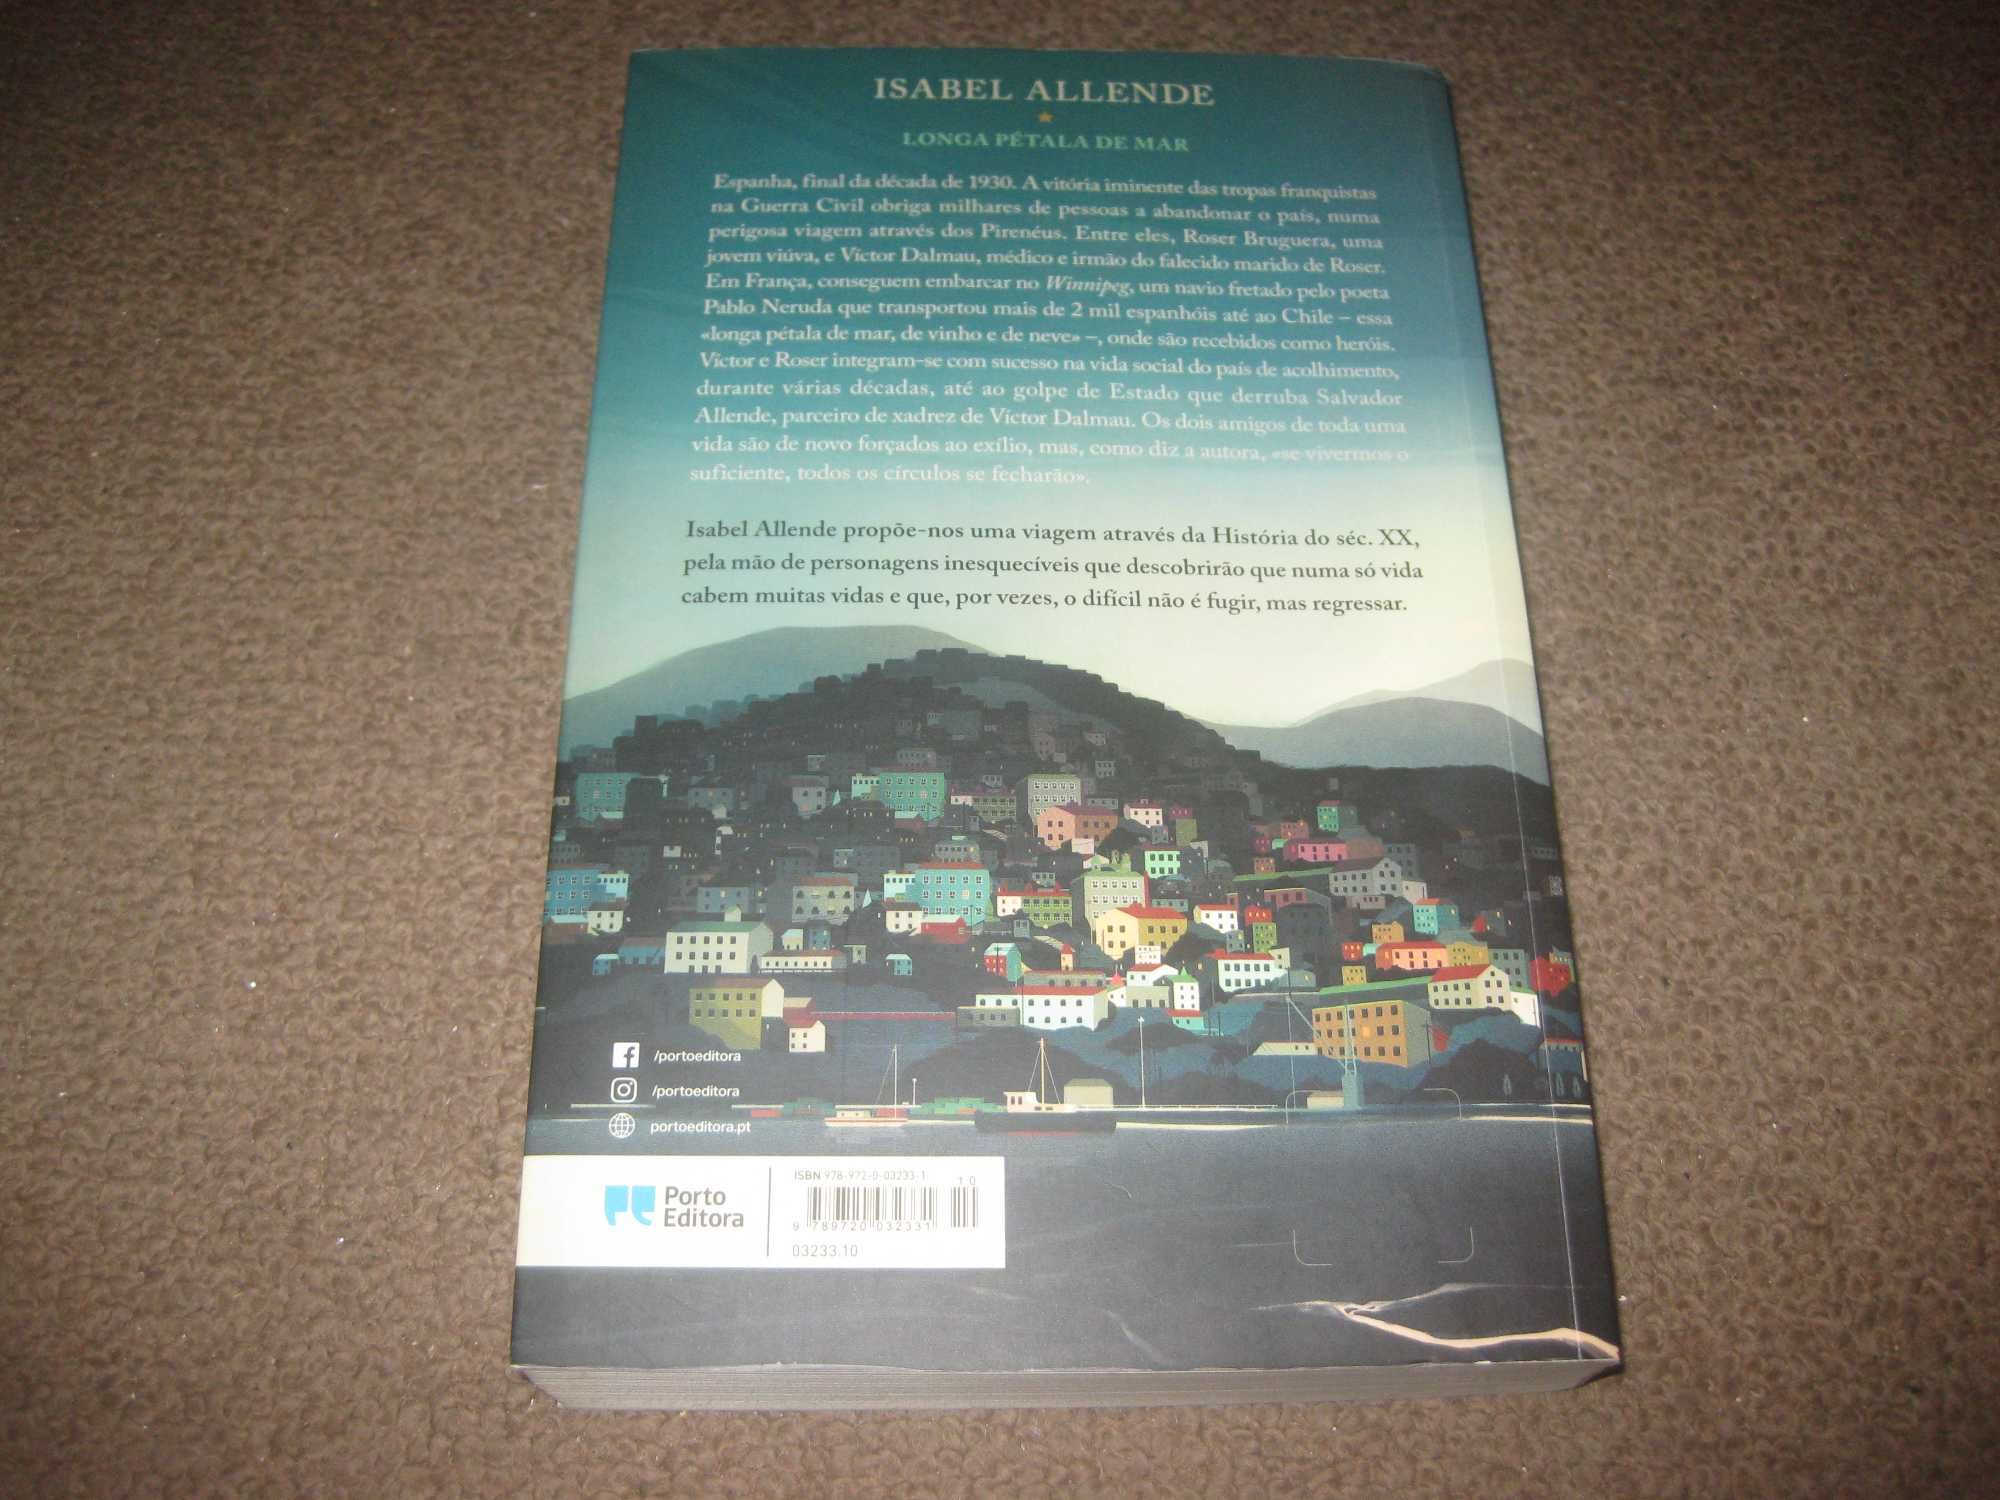 Livro "Longa Pétala de Mar" de Isabel Allende